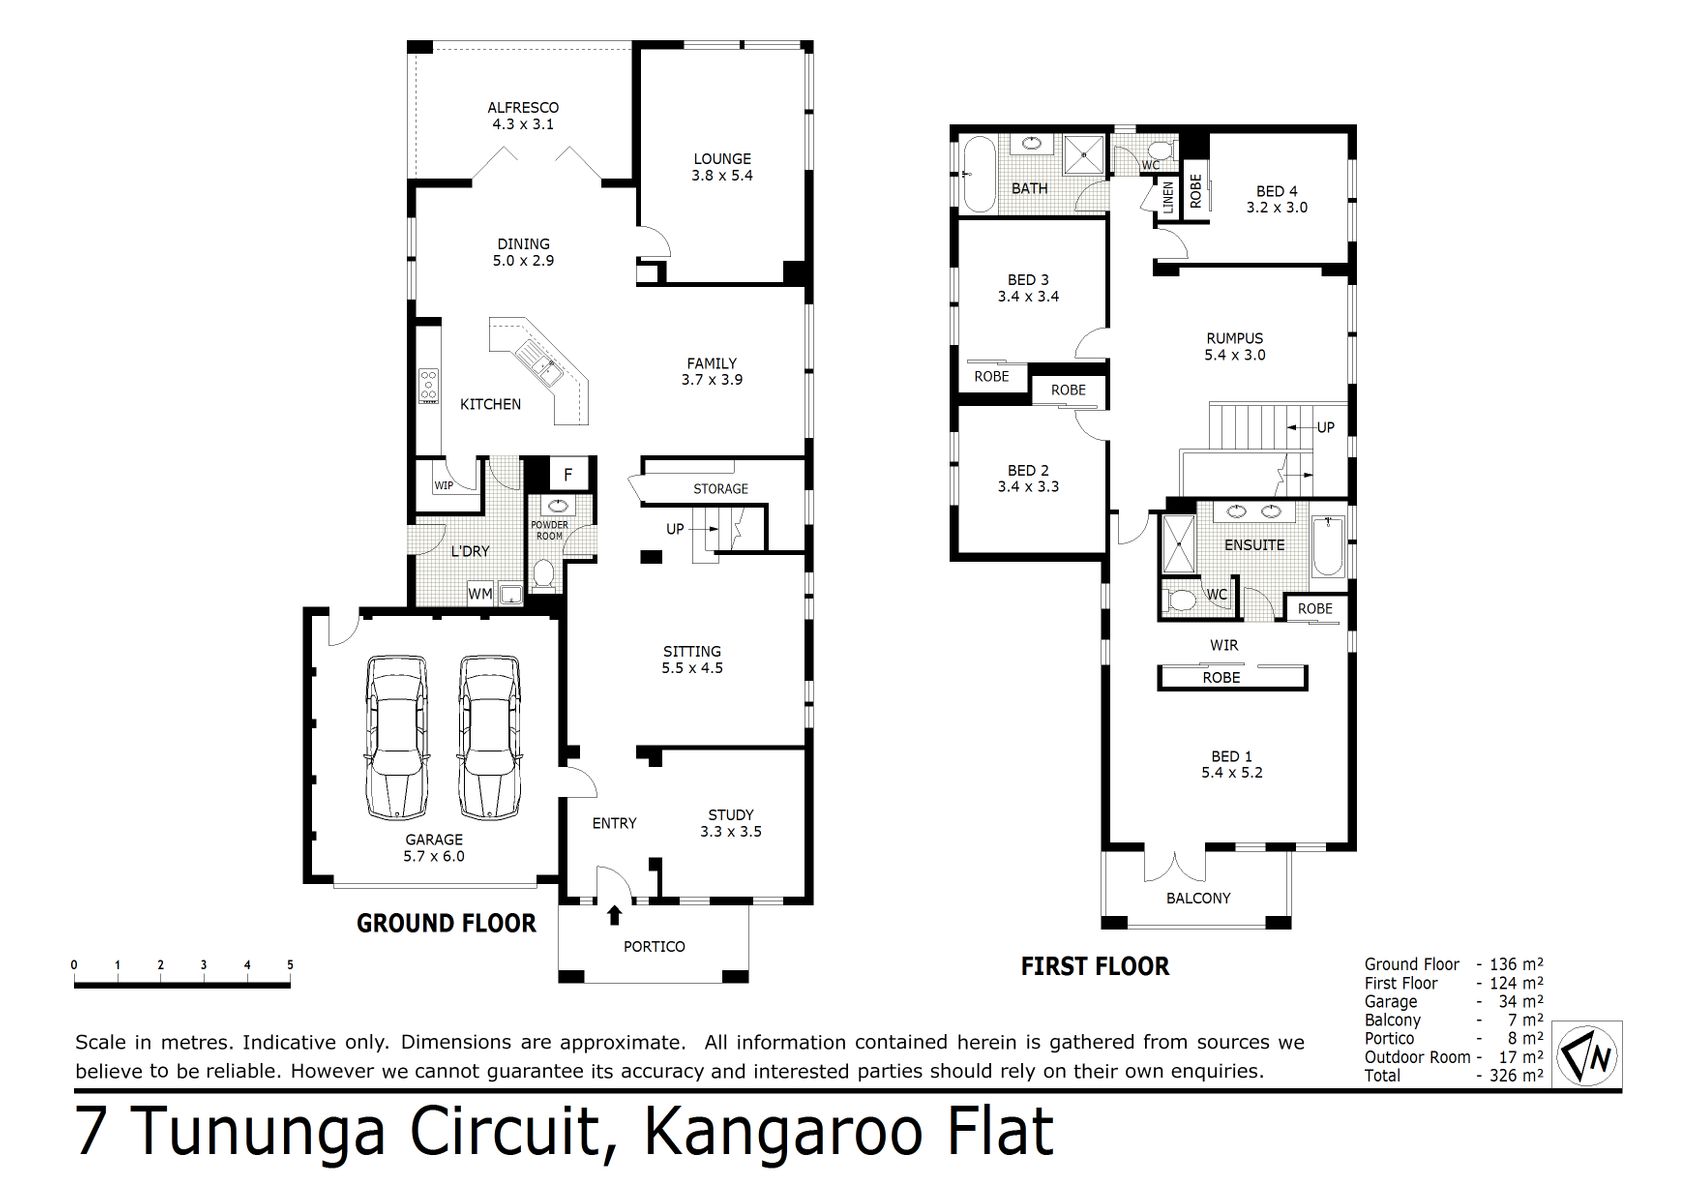 7 Tununga Circuit Kangaroo Flat (27 AUG 2019) 294sqm